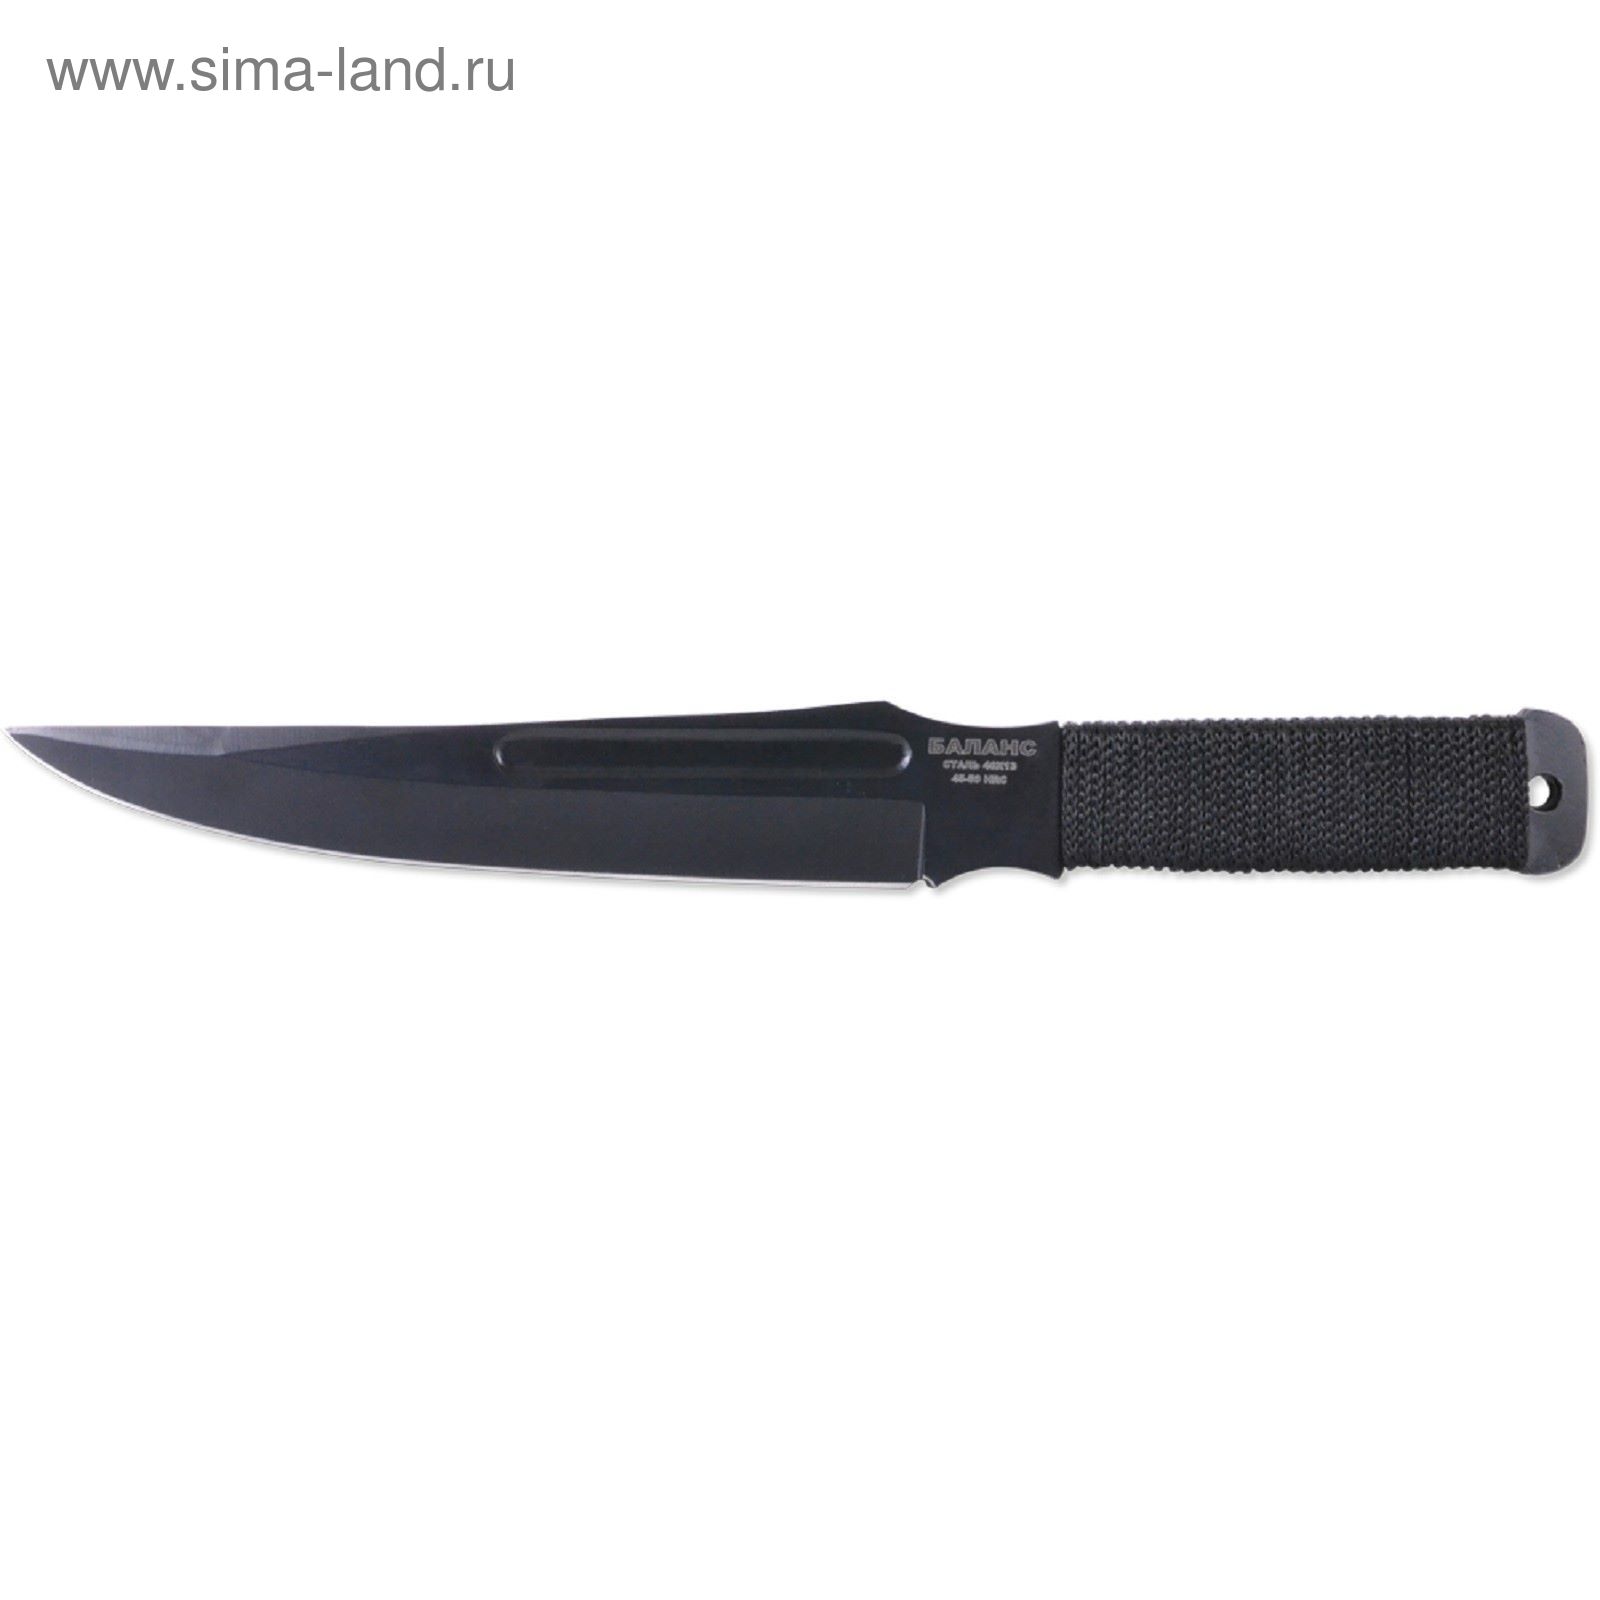 Нож метательный M-115-1 "Баланс", рукоять-металл, сталь 40х13